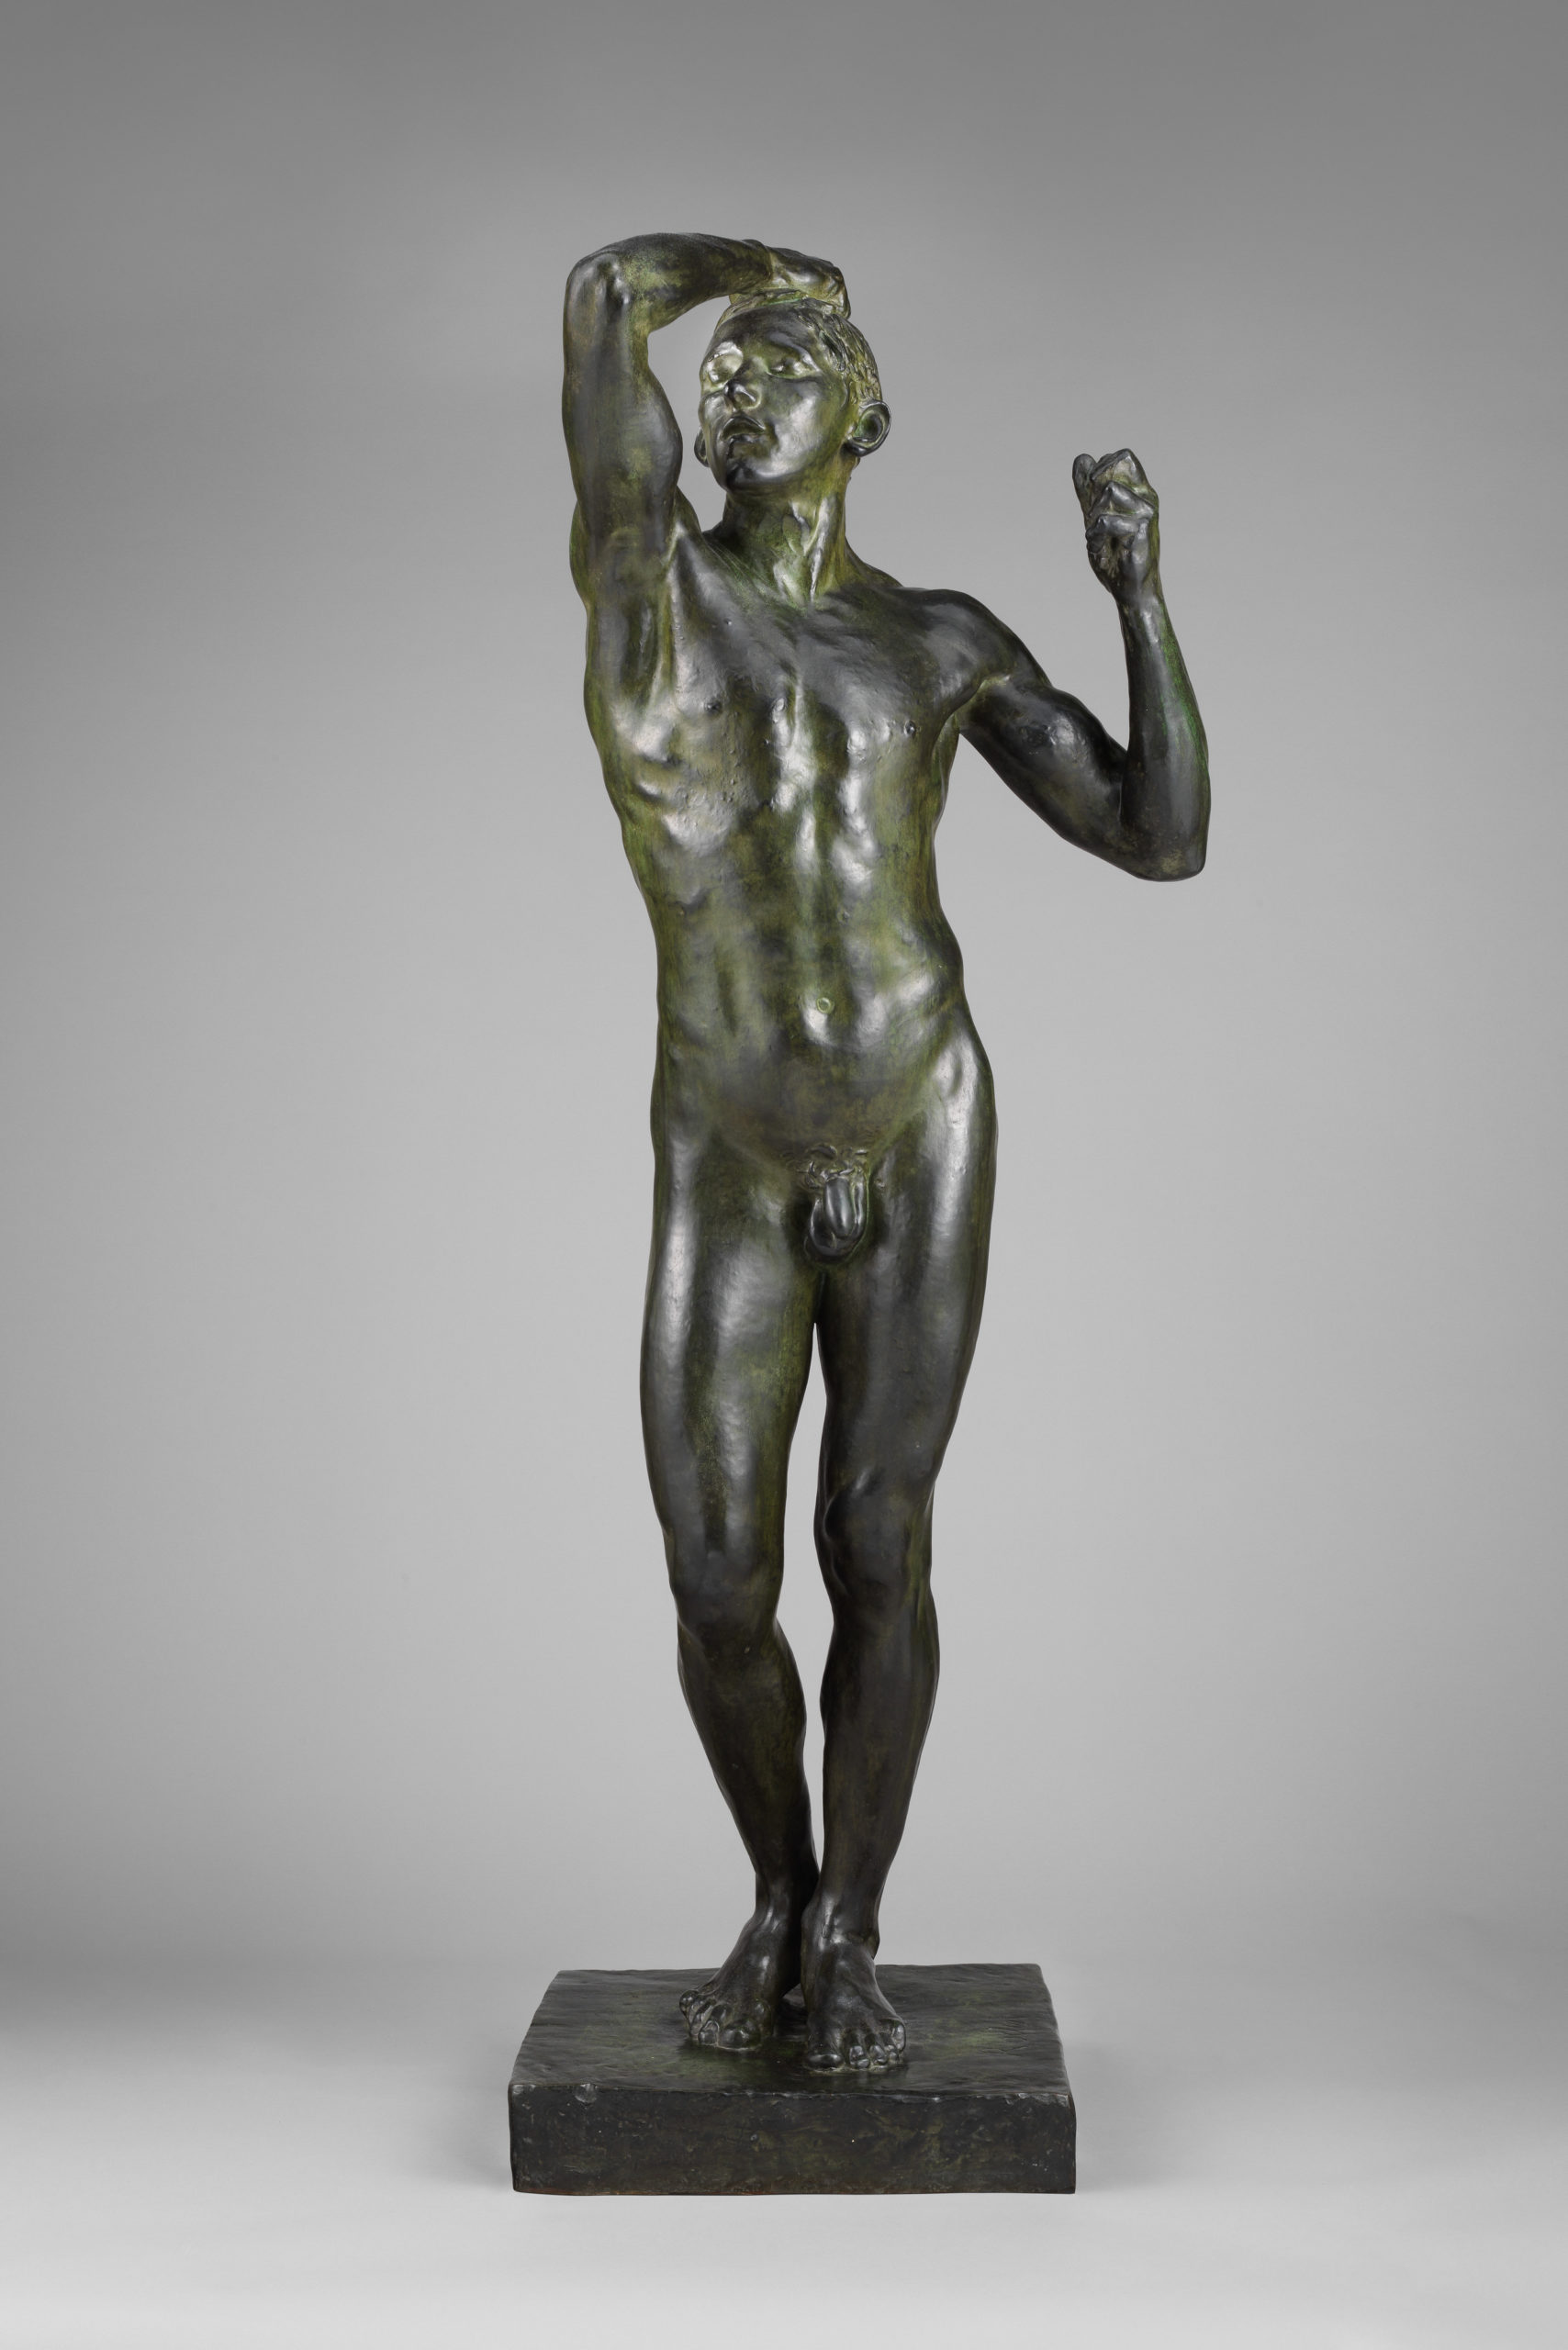 Auguste Rodin, The Age of Bronze (L’Age d’airain), modeled 1876, cast by Alexis Rudier c. 1906, bronze, 182.9 cm high (The Metropolitan Museum of Art)